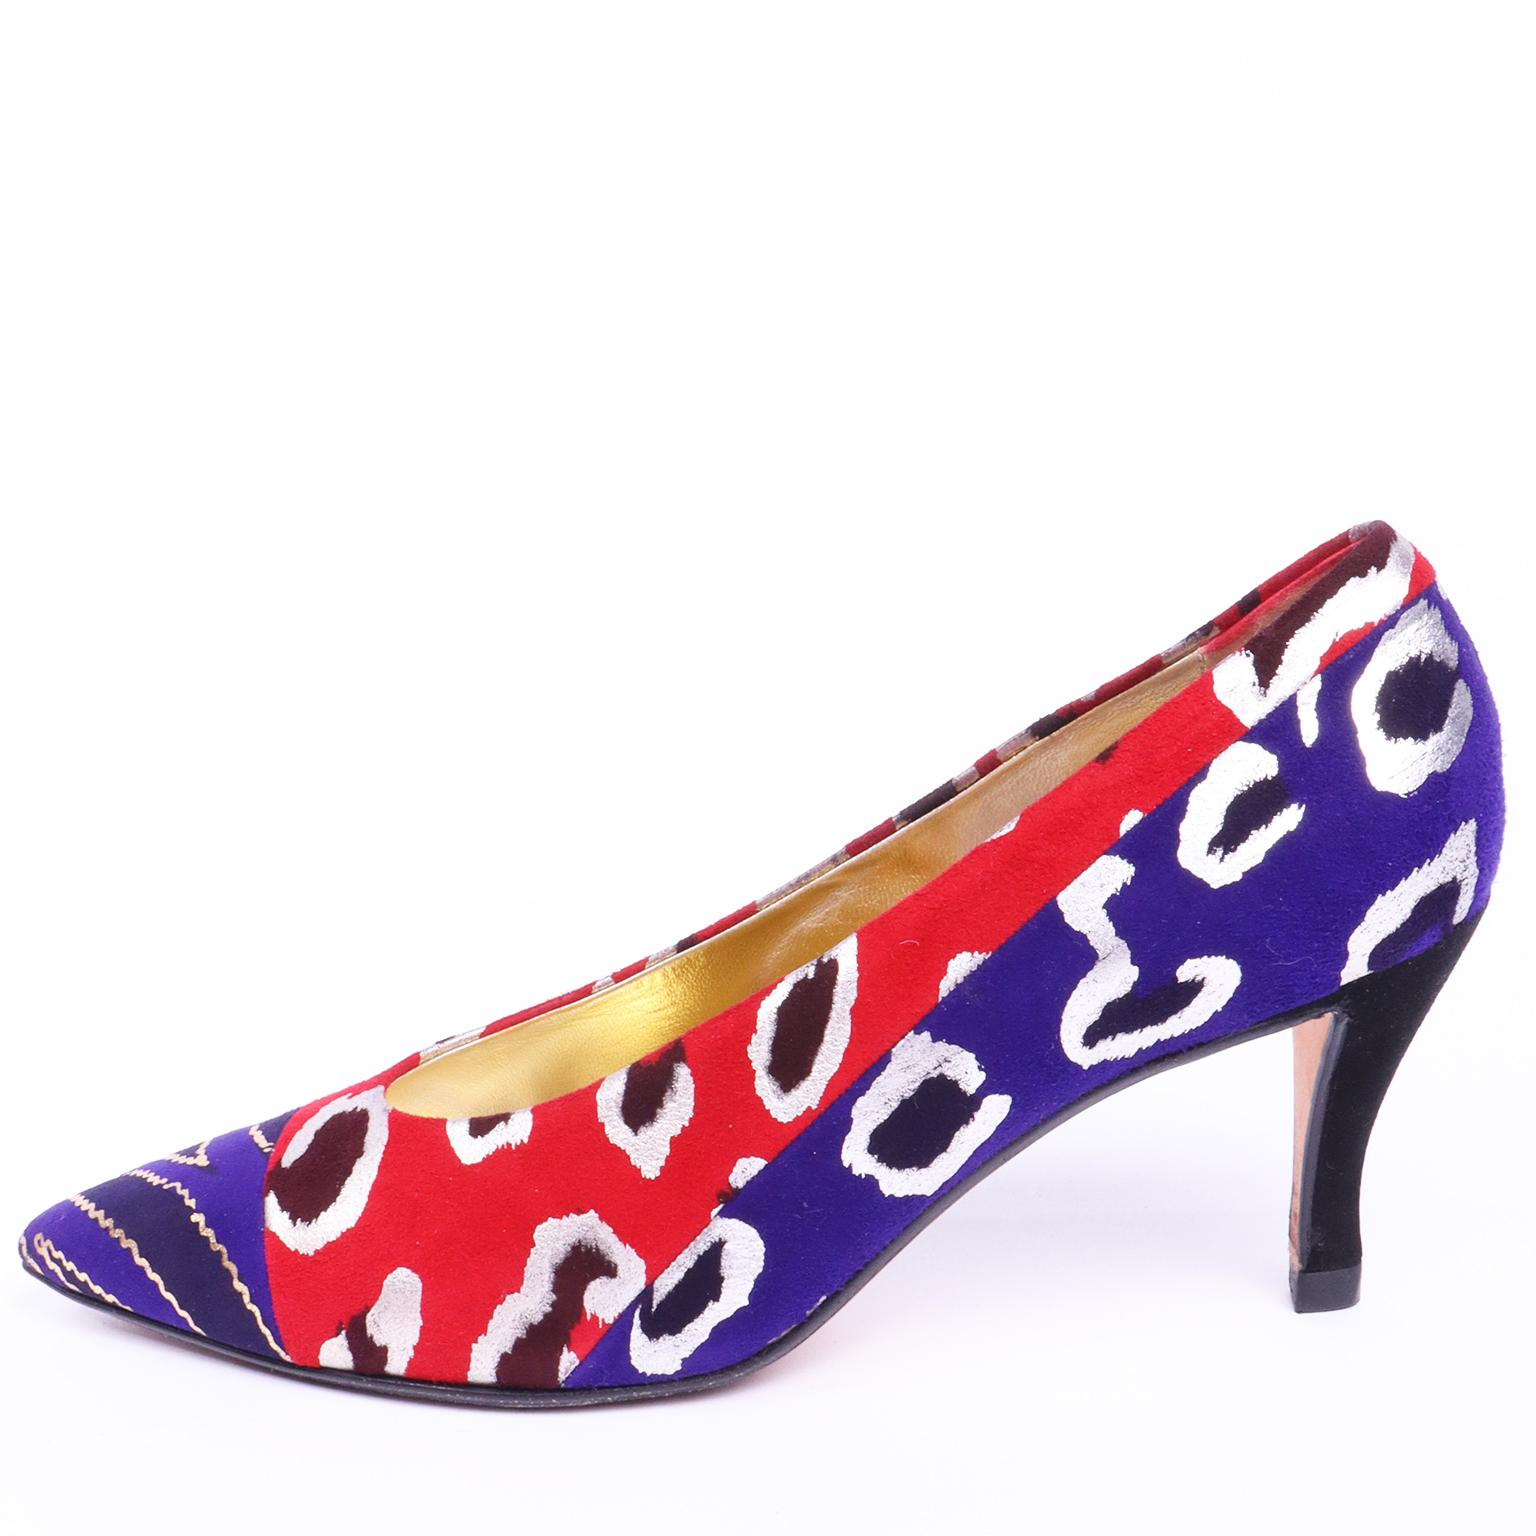 Andrea Pfister Couture Vintage Wildleder Schuhe mit abstraktem Leopardenmuster in Rot & Blau im Angebot 1